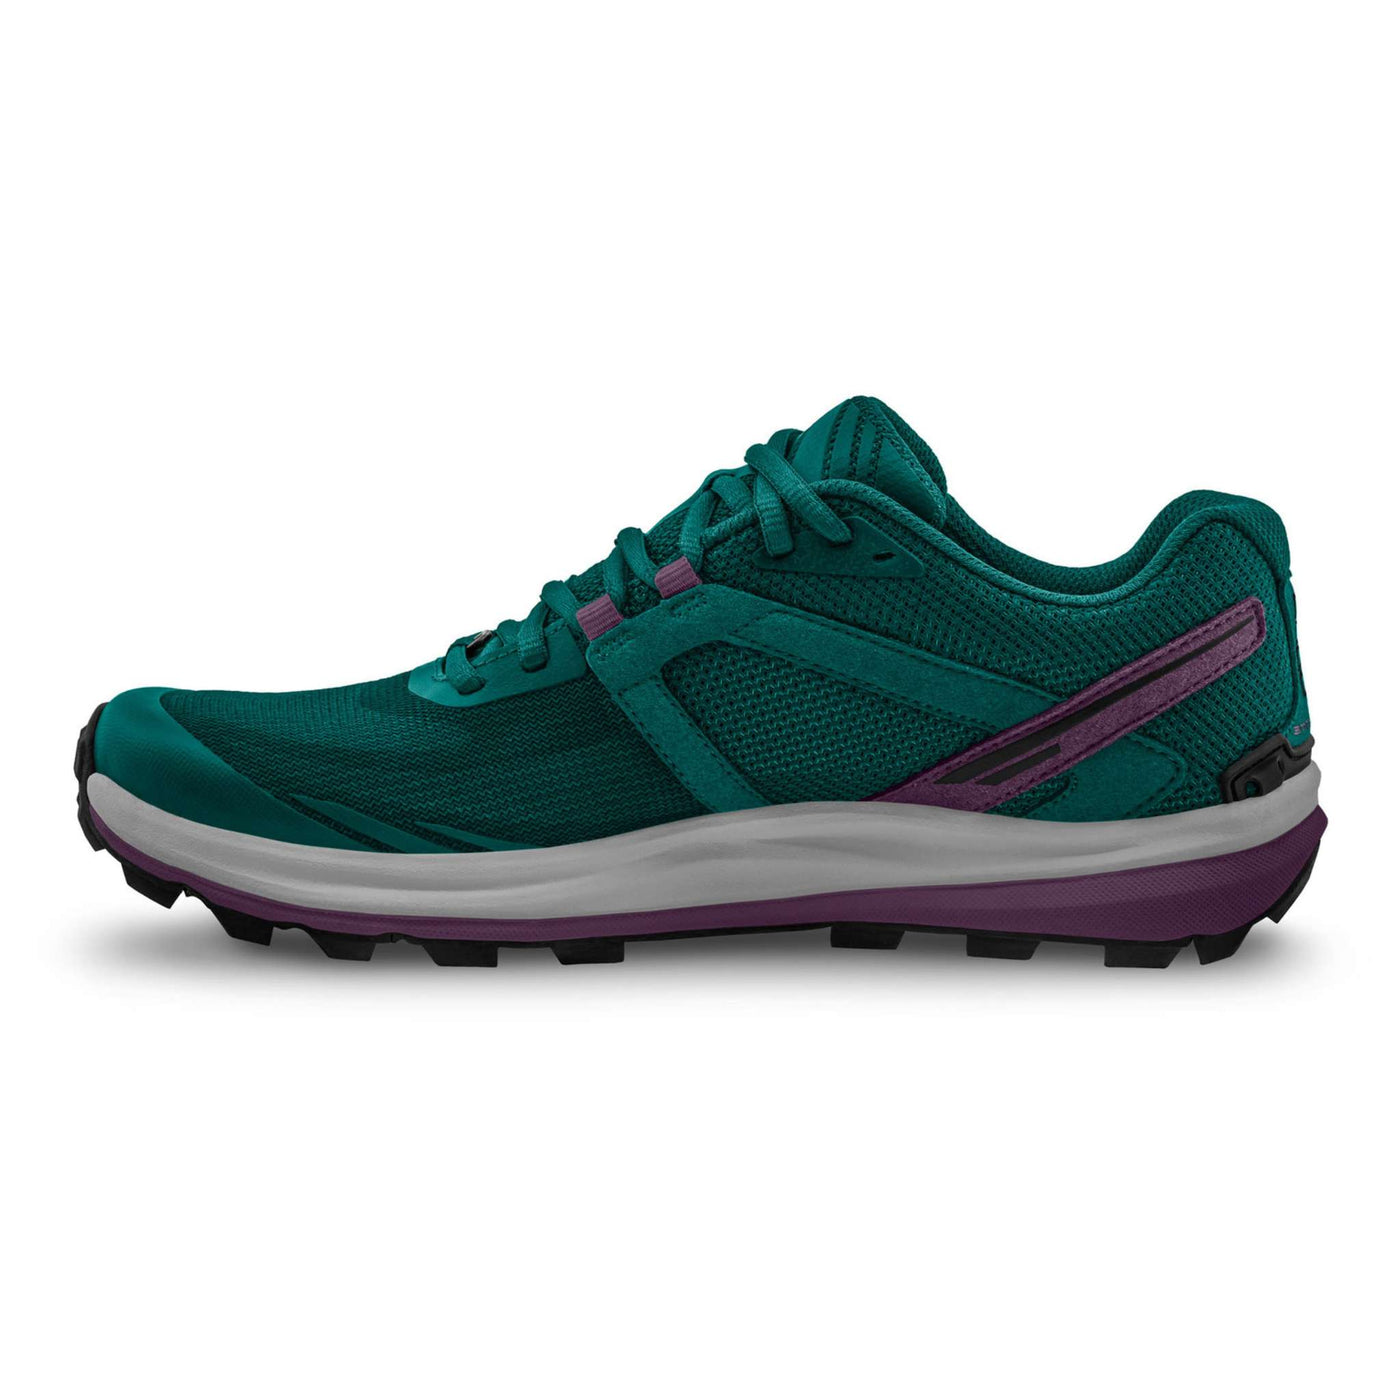 Topo Terraventure 3 - Womens | Women's Trail Running Shoes | Further Faster Christchurch NZ | #teal-purple